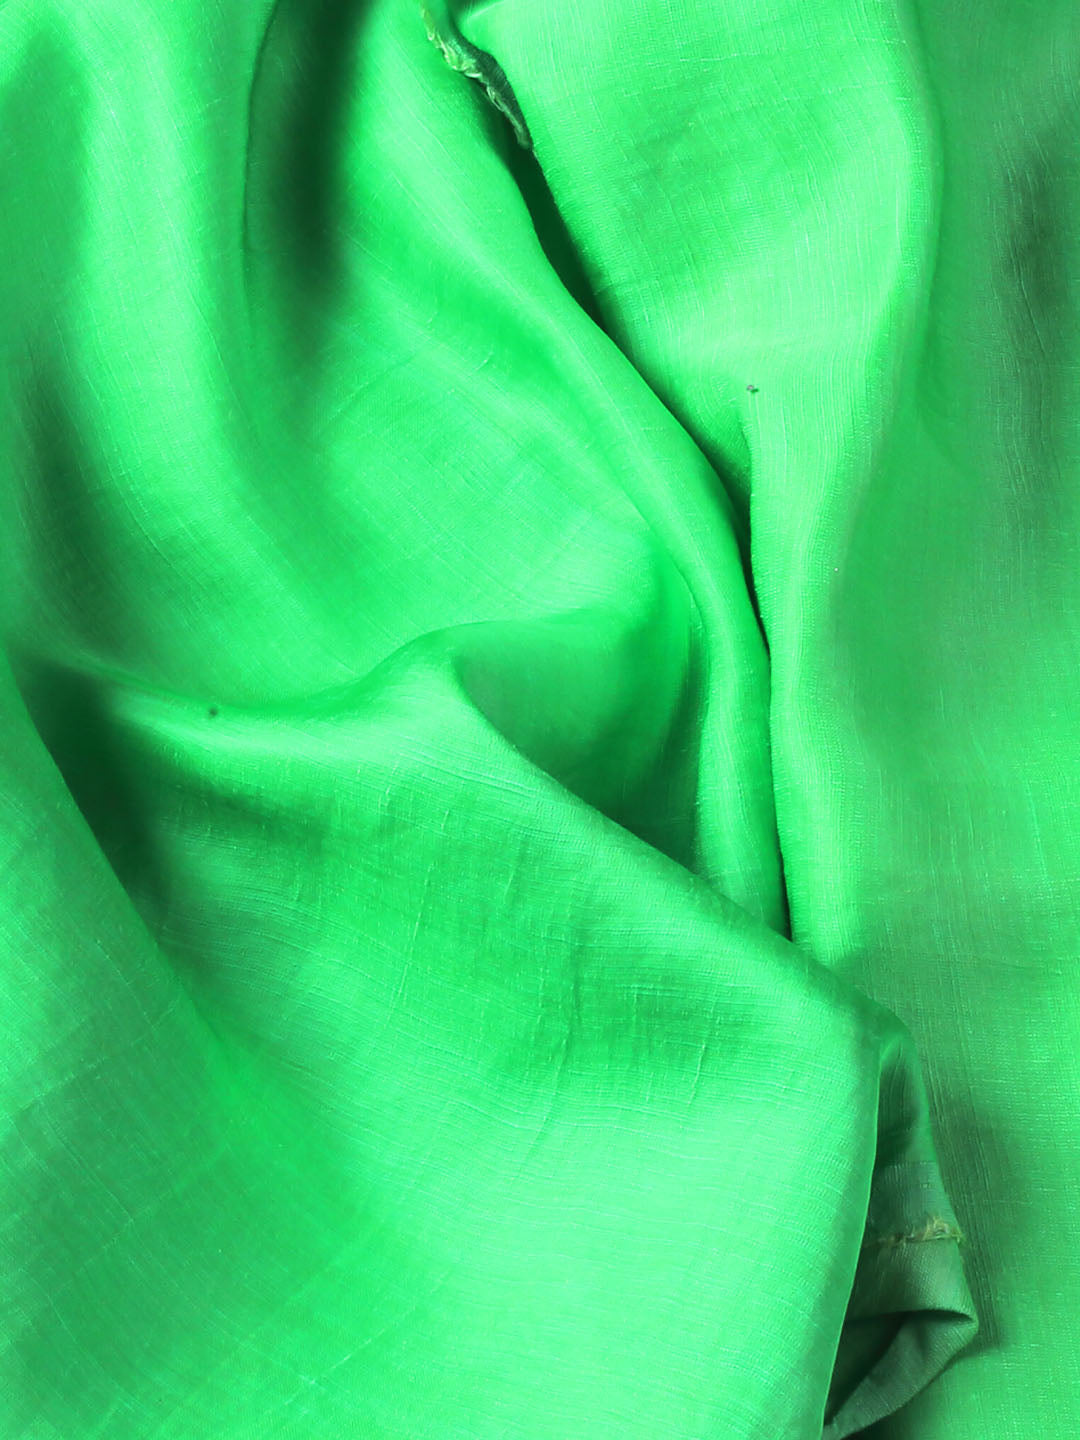 Neon Green Linen Satin Fabric